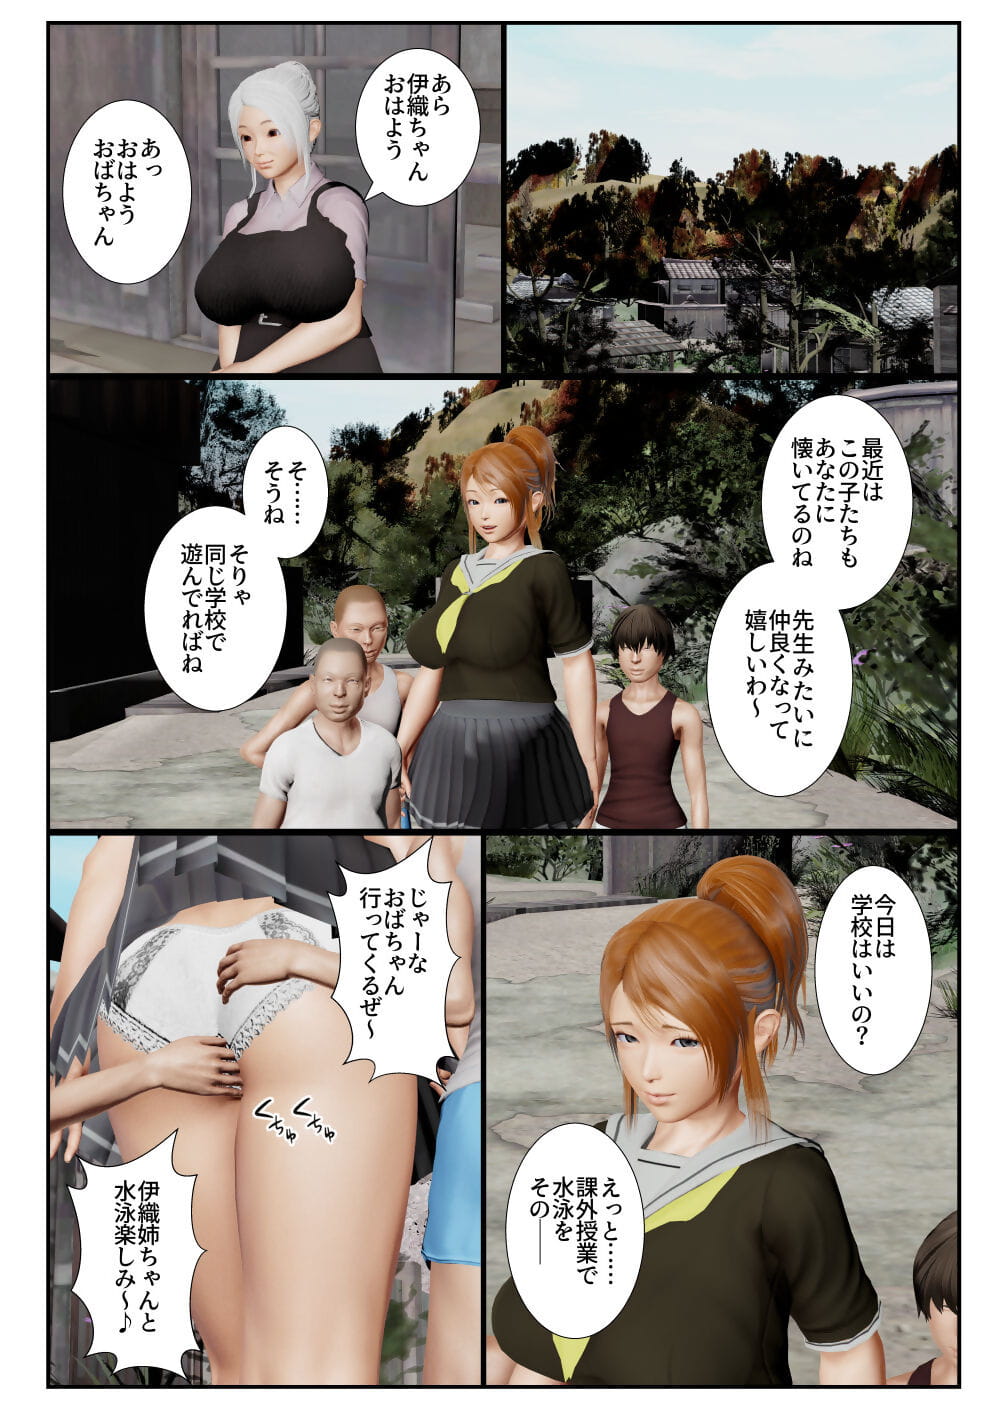 goriramu Touma kenshi Shirizu Demon Schwertkämpfer Serie Teil 5 page 1